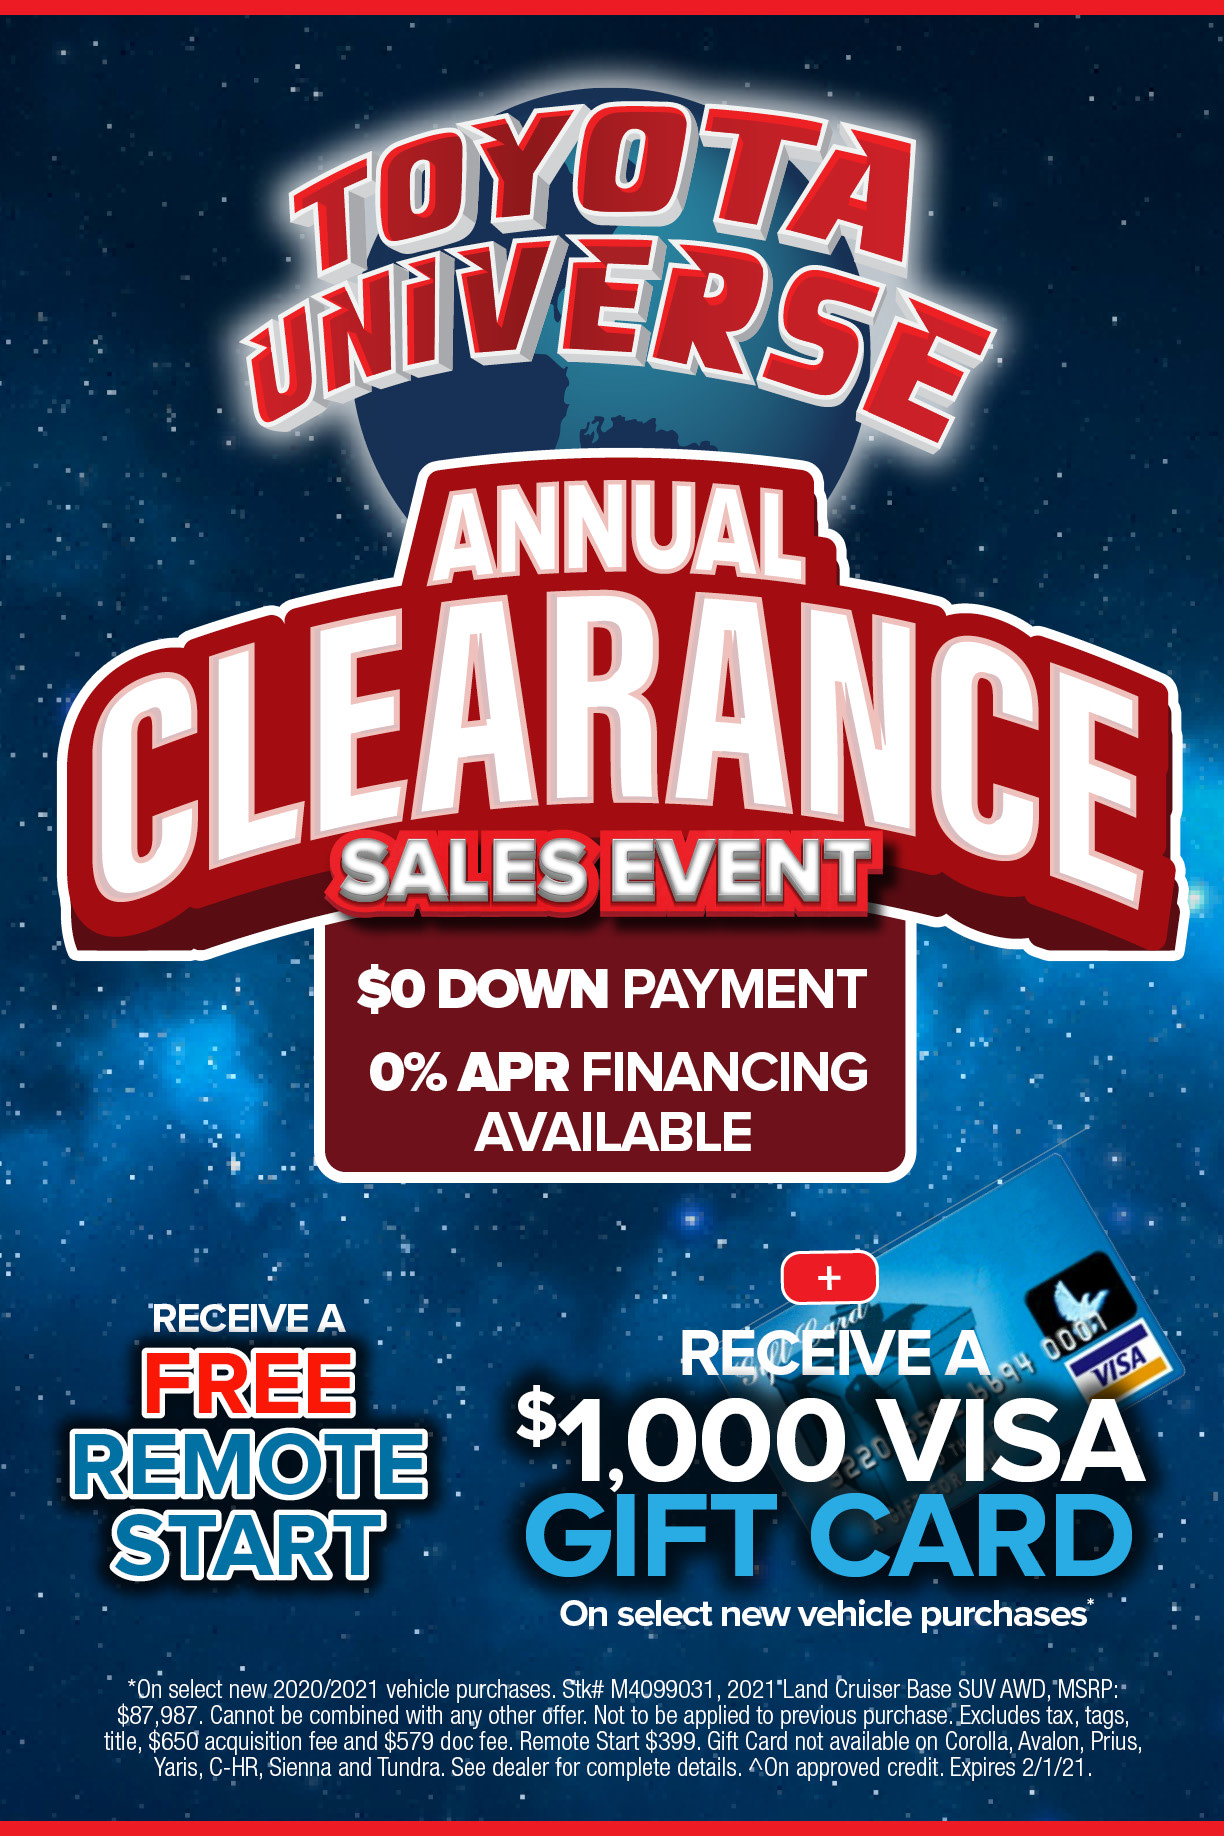 Annual Clearance Sale  Our Annual Clearance Sale has begun with